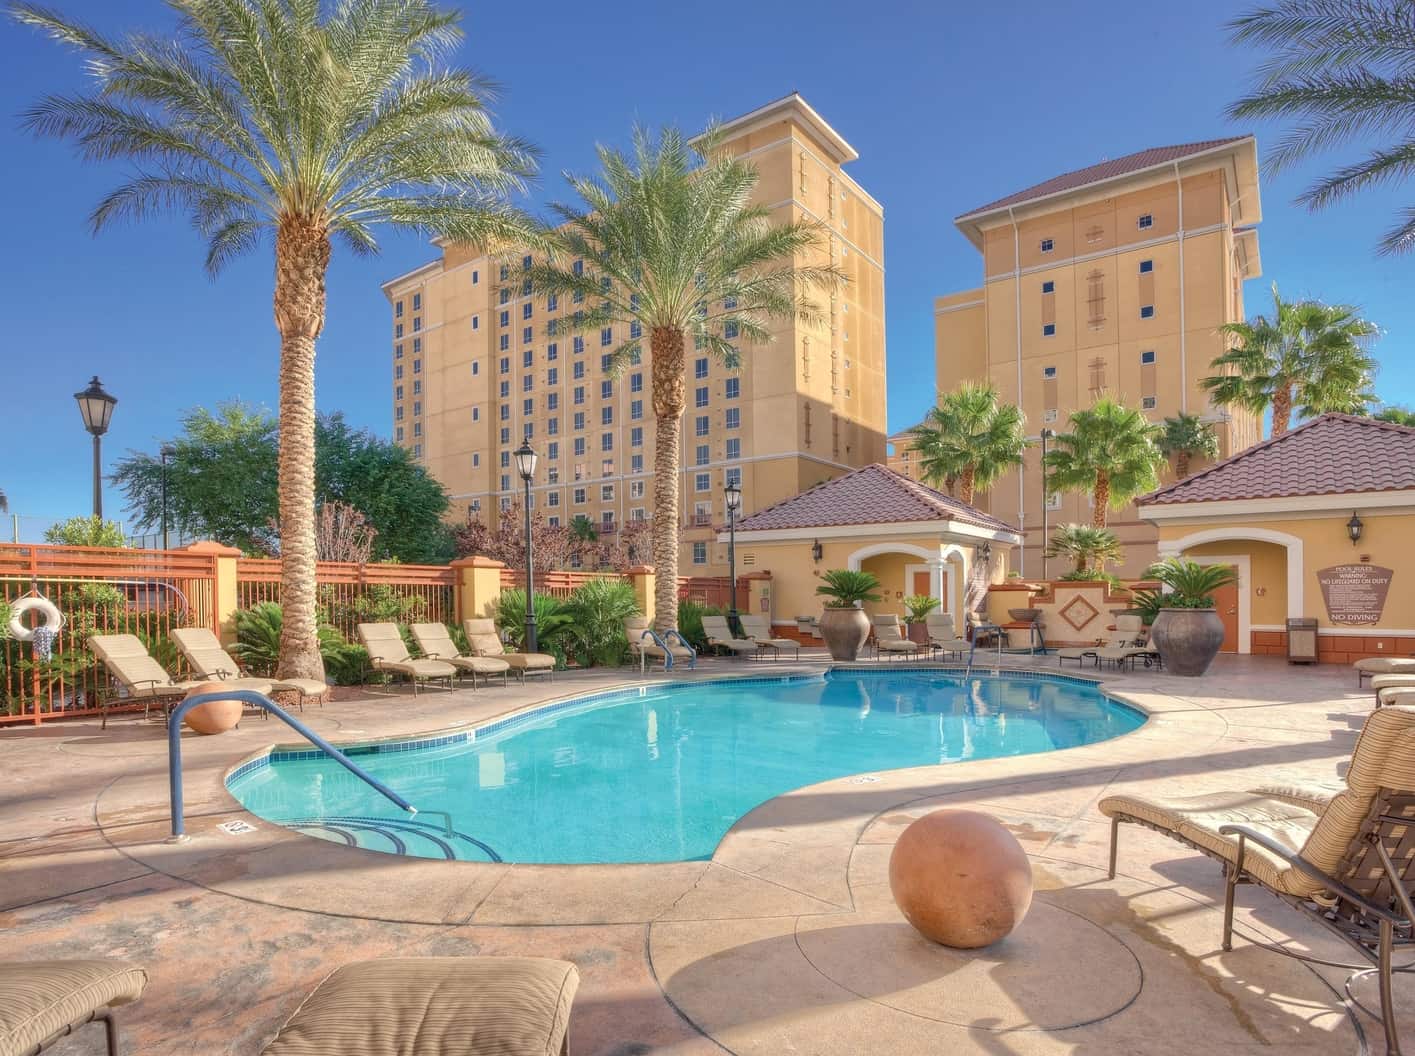 Wyndham Grand Desert Resort, Vegas hotels without resort fees